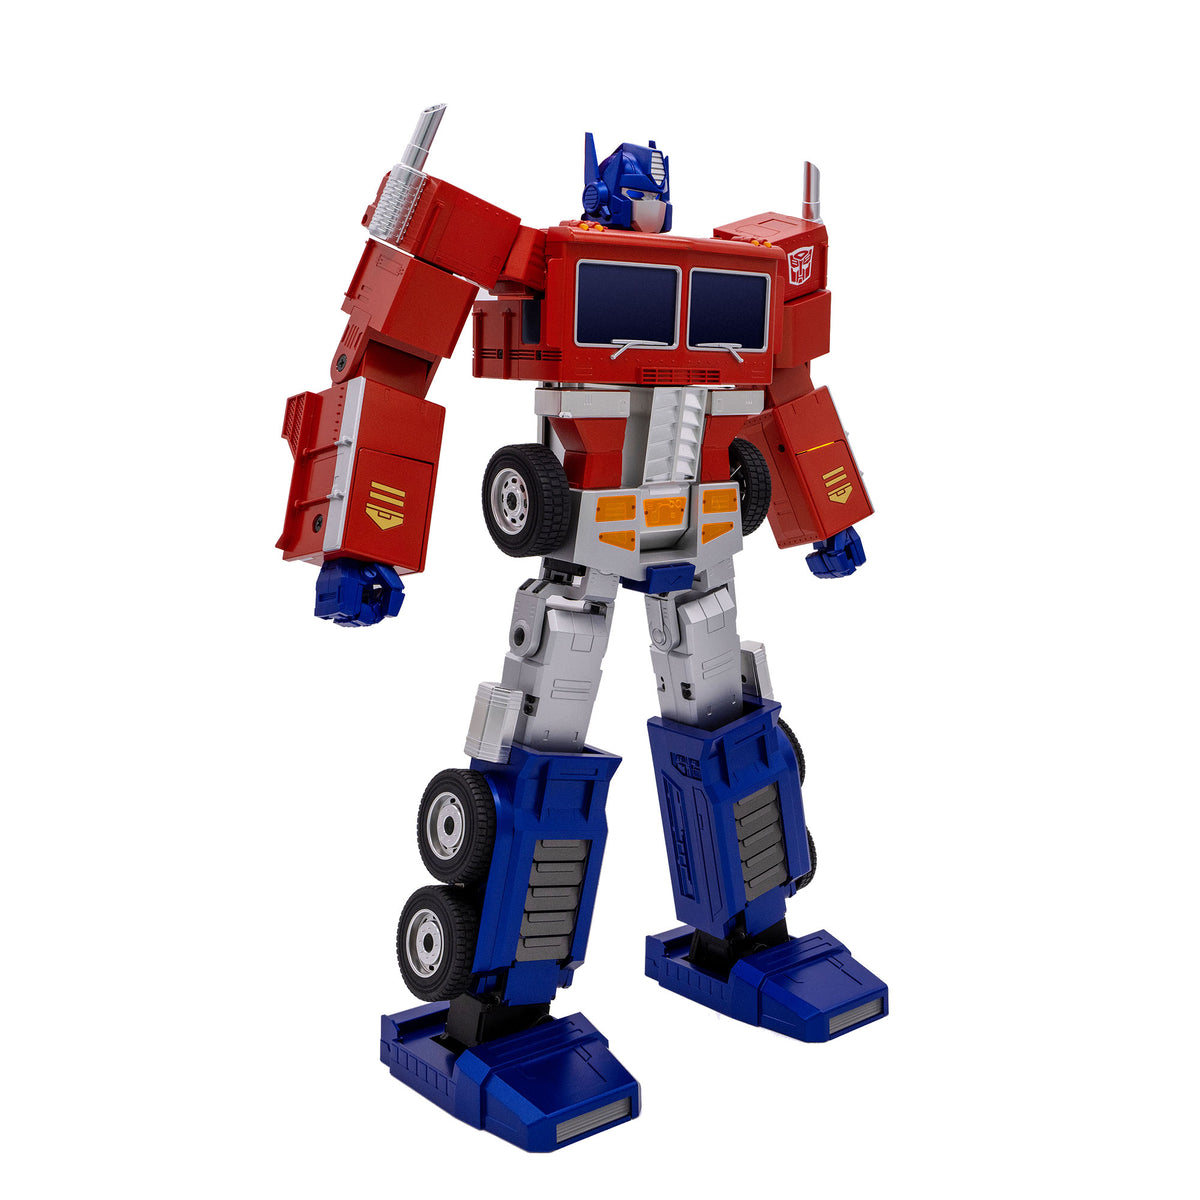 Transformers Optimus Auto-Converting Robot (Elite) by Hasbro Pulse